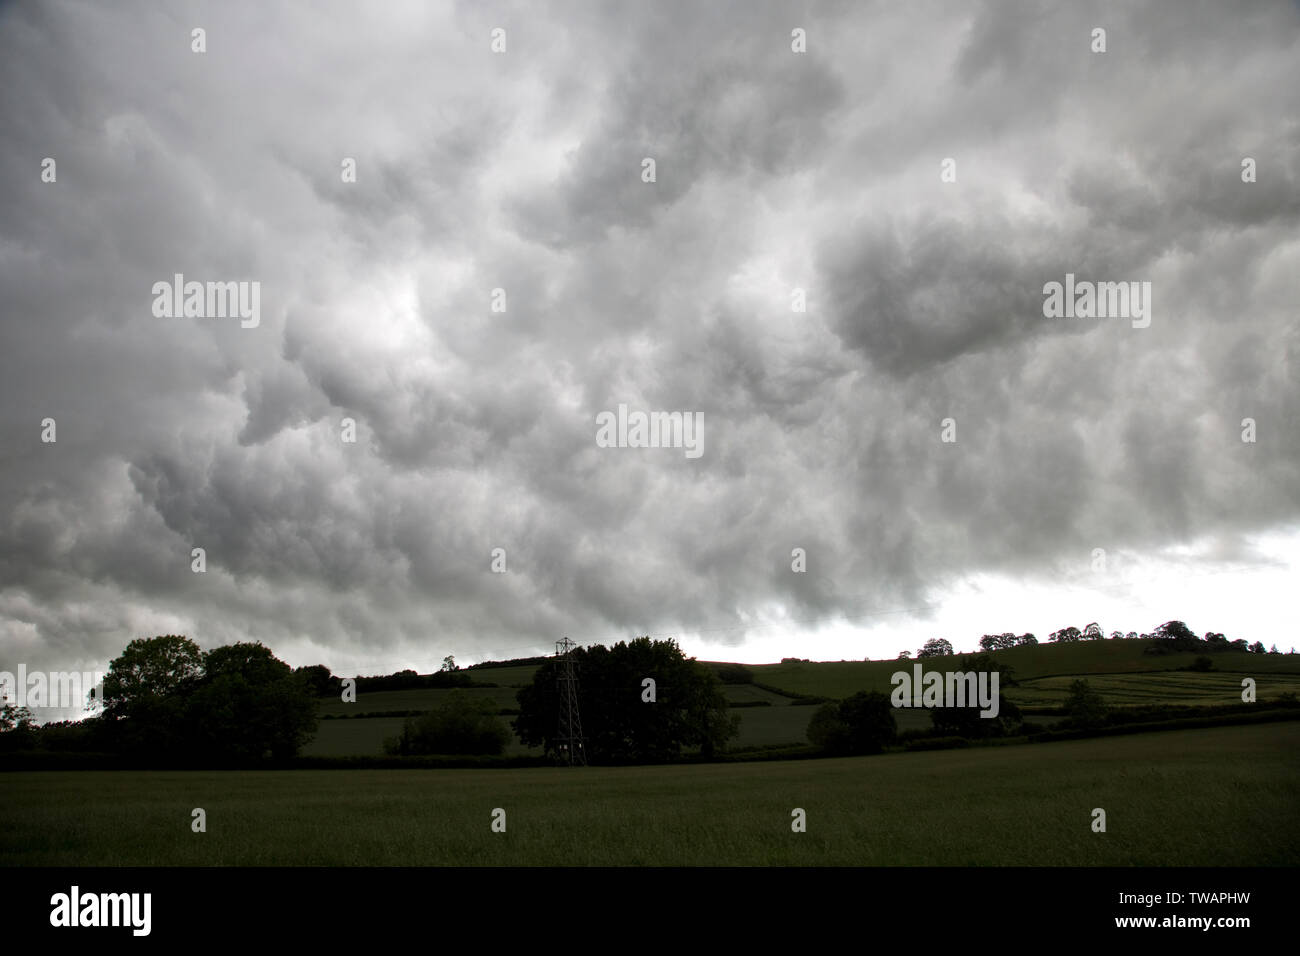 Oscuras nubes de tormenta se cierne sobre Miguel Meon colina cerca de Mickleton, Chipping Campden, RU Foto de stock